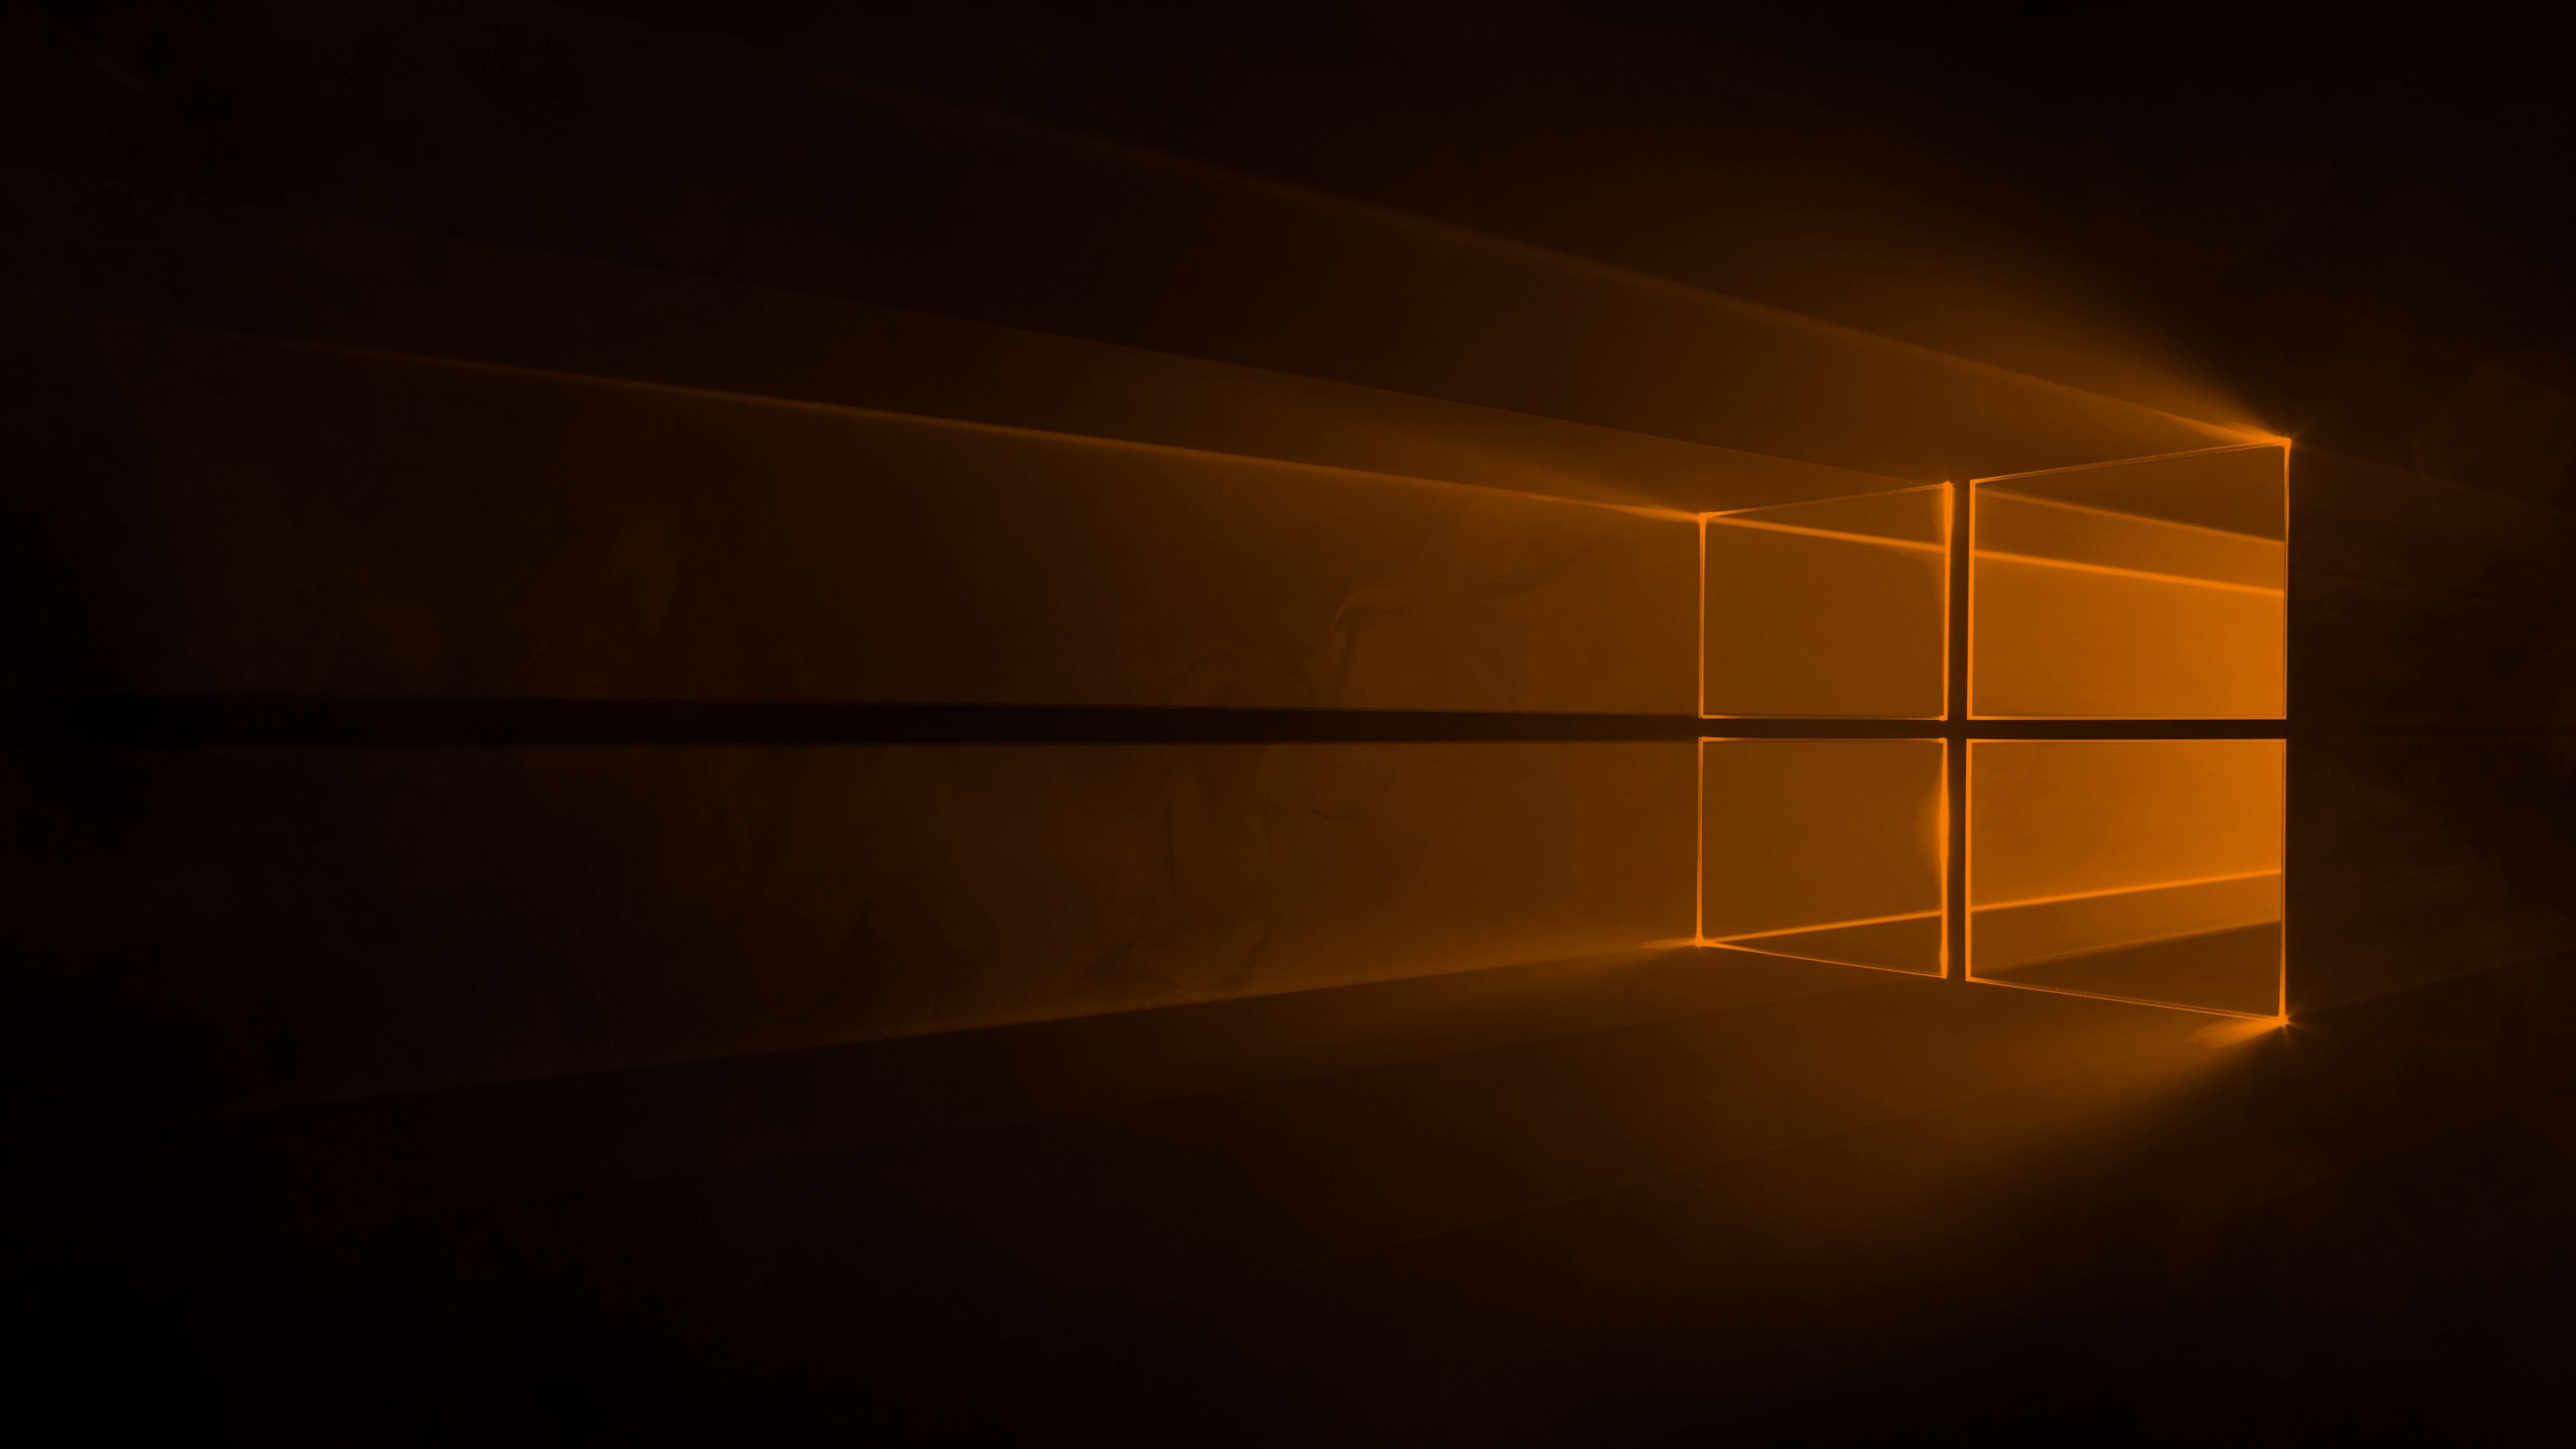 Windows 10 windows 10 background orange with optimal resolution for desktop